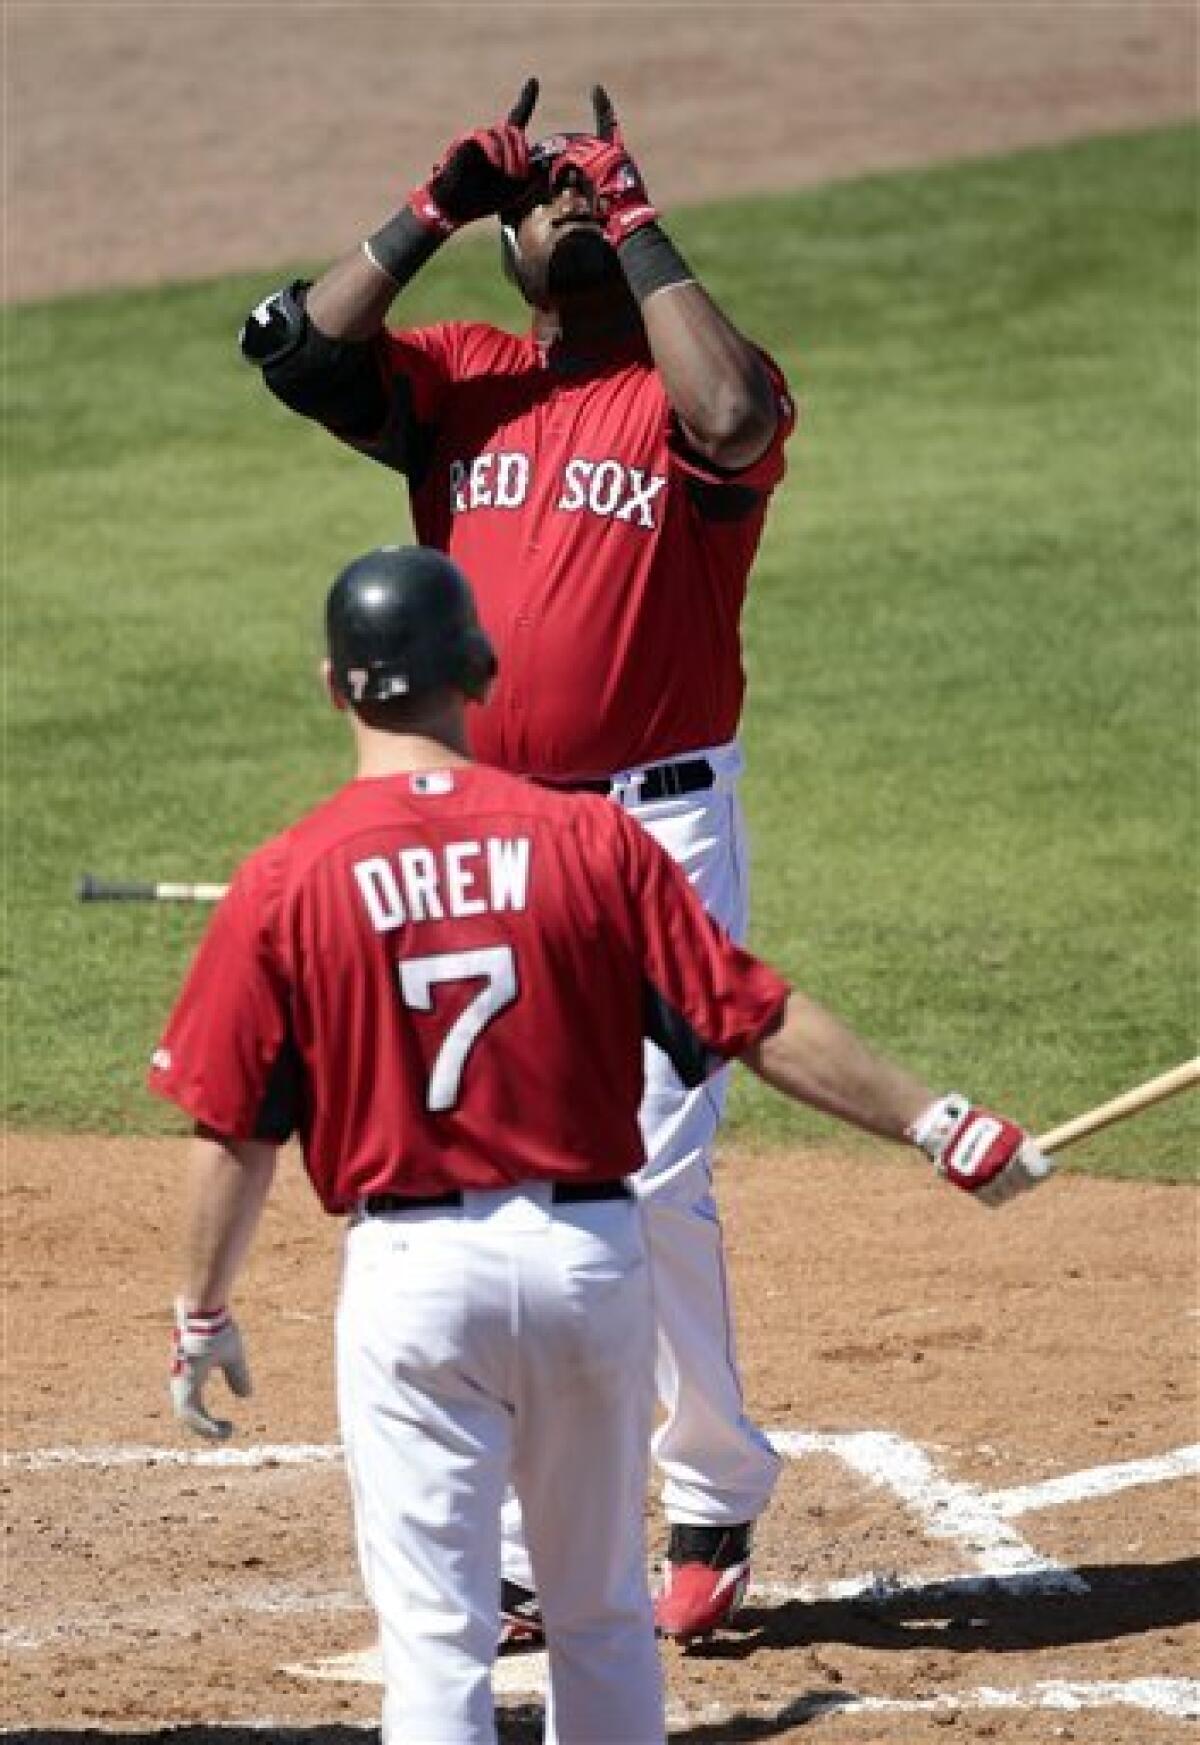 Ortiz, Bay homer as Red Sox beat Twins 9-5 - The San Diego Union-Tribune